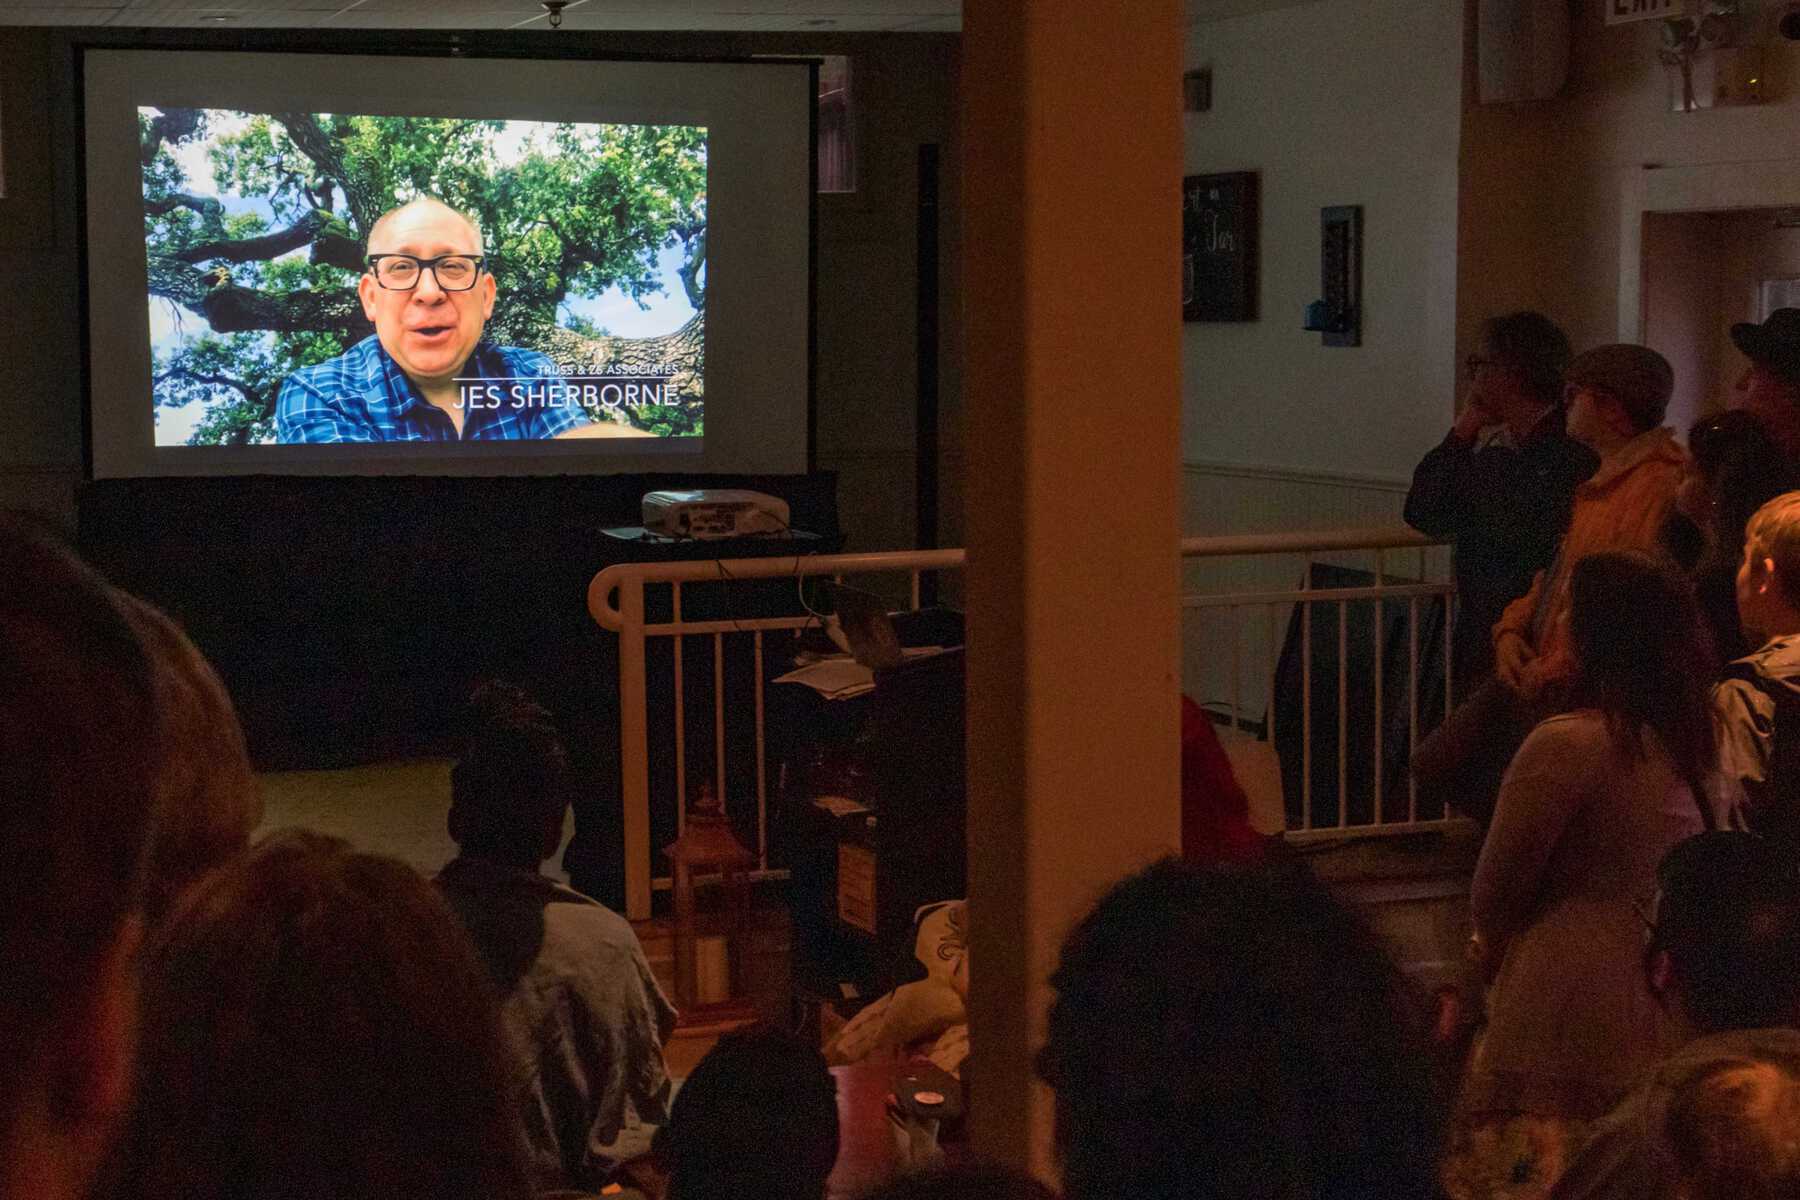 People watching video on projector screen of man speaking